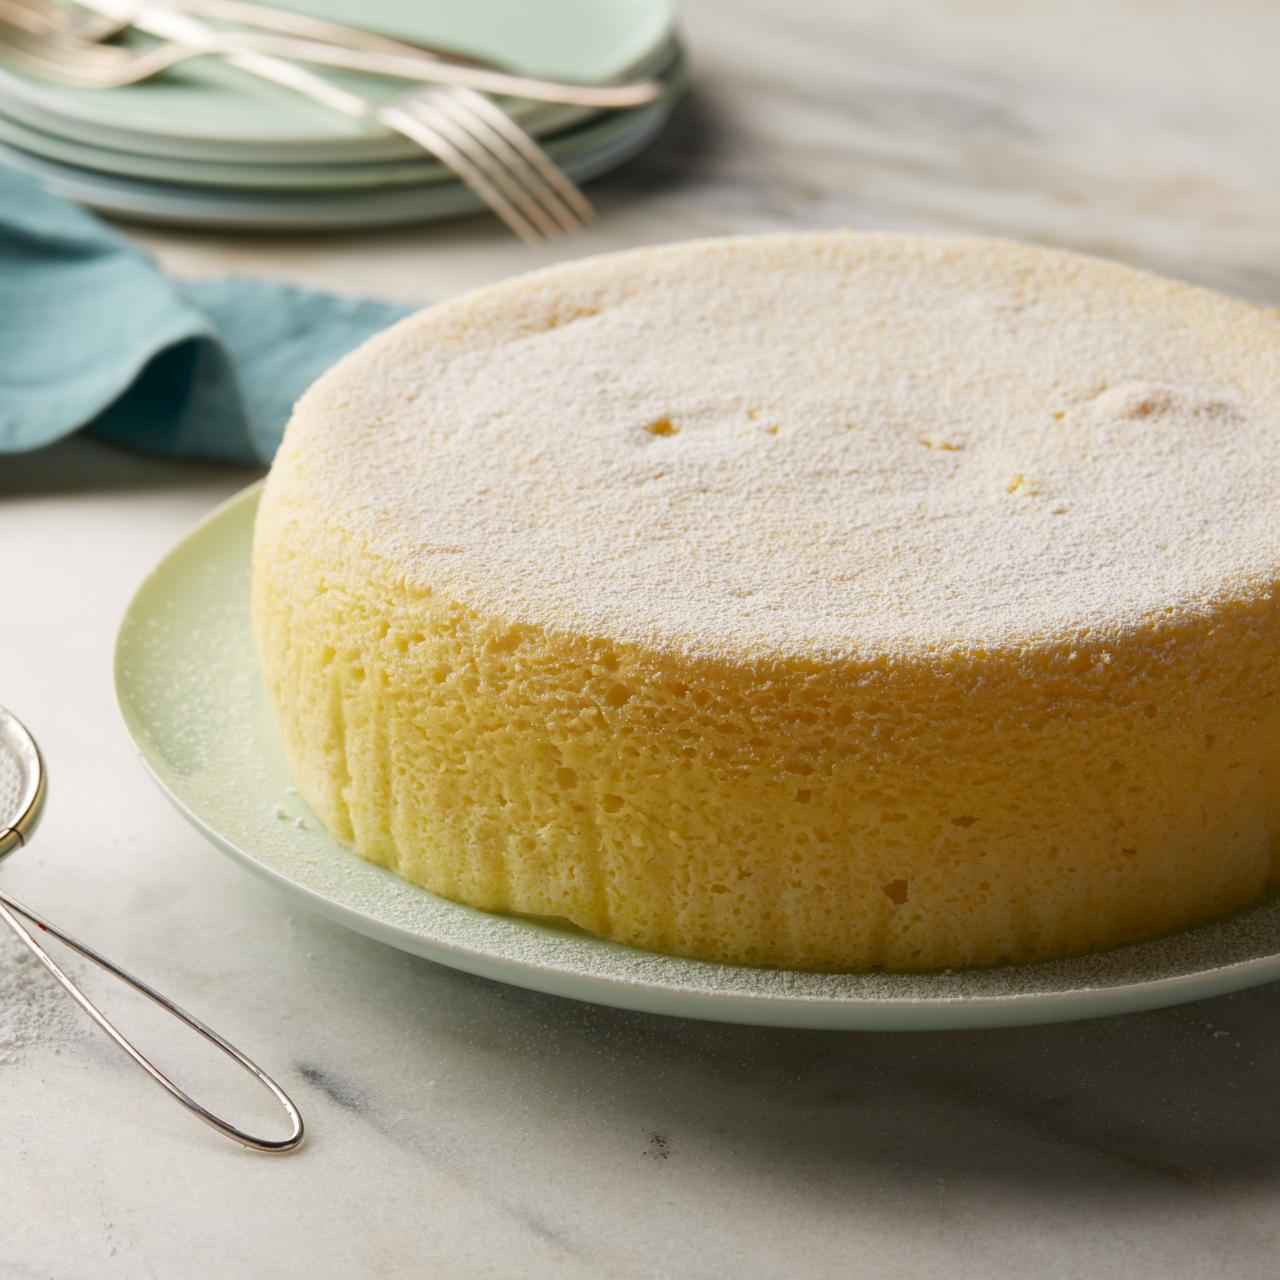 How to Make Vanilla Chiffon Cake | Basic Recipe - YouTube